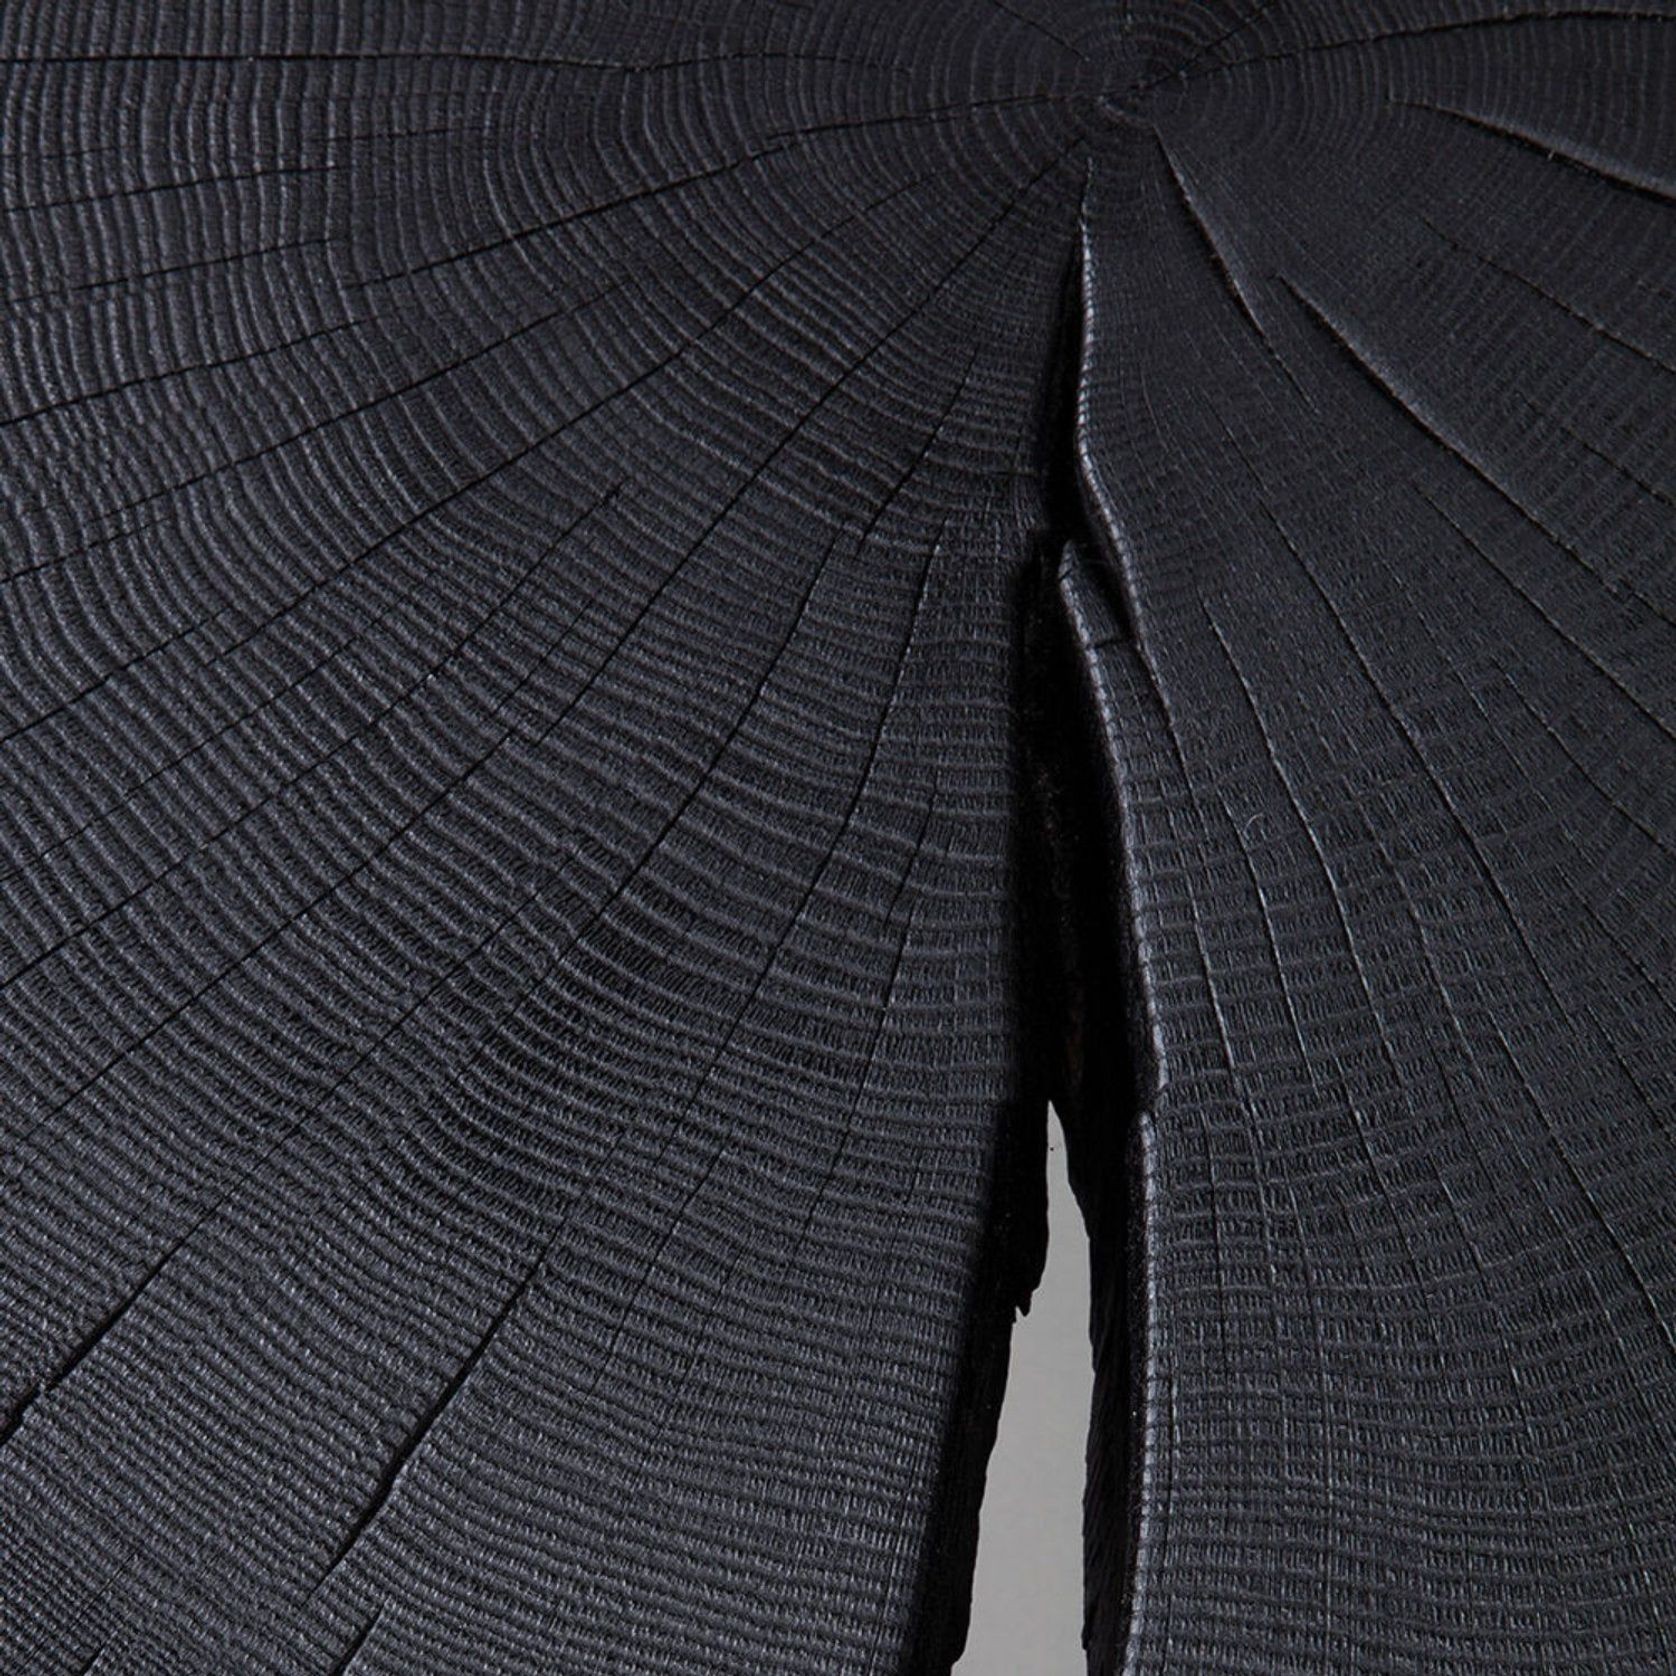 Janua | BC 05 Stomp Table | 40-50cm | Black gallery detail image